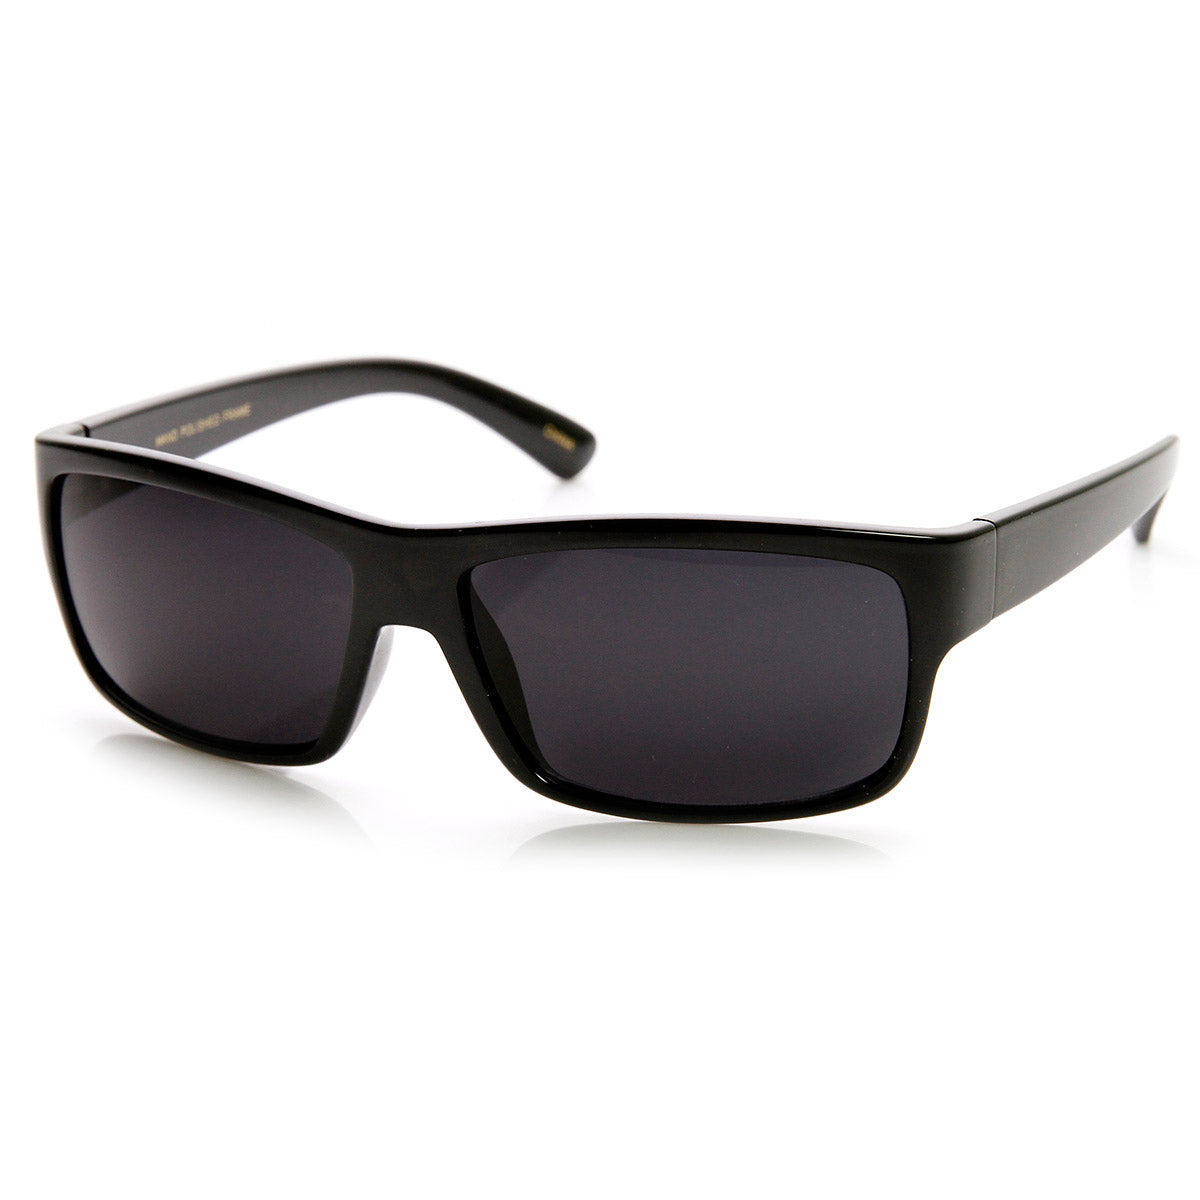 High Quality Action Sports Rectangular Lightweight Sunglasses